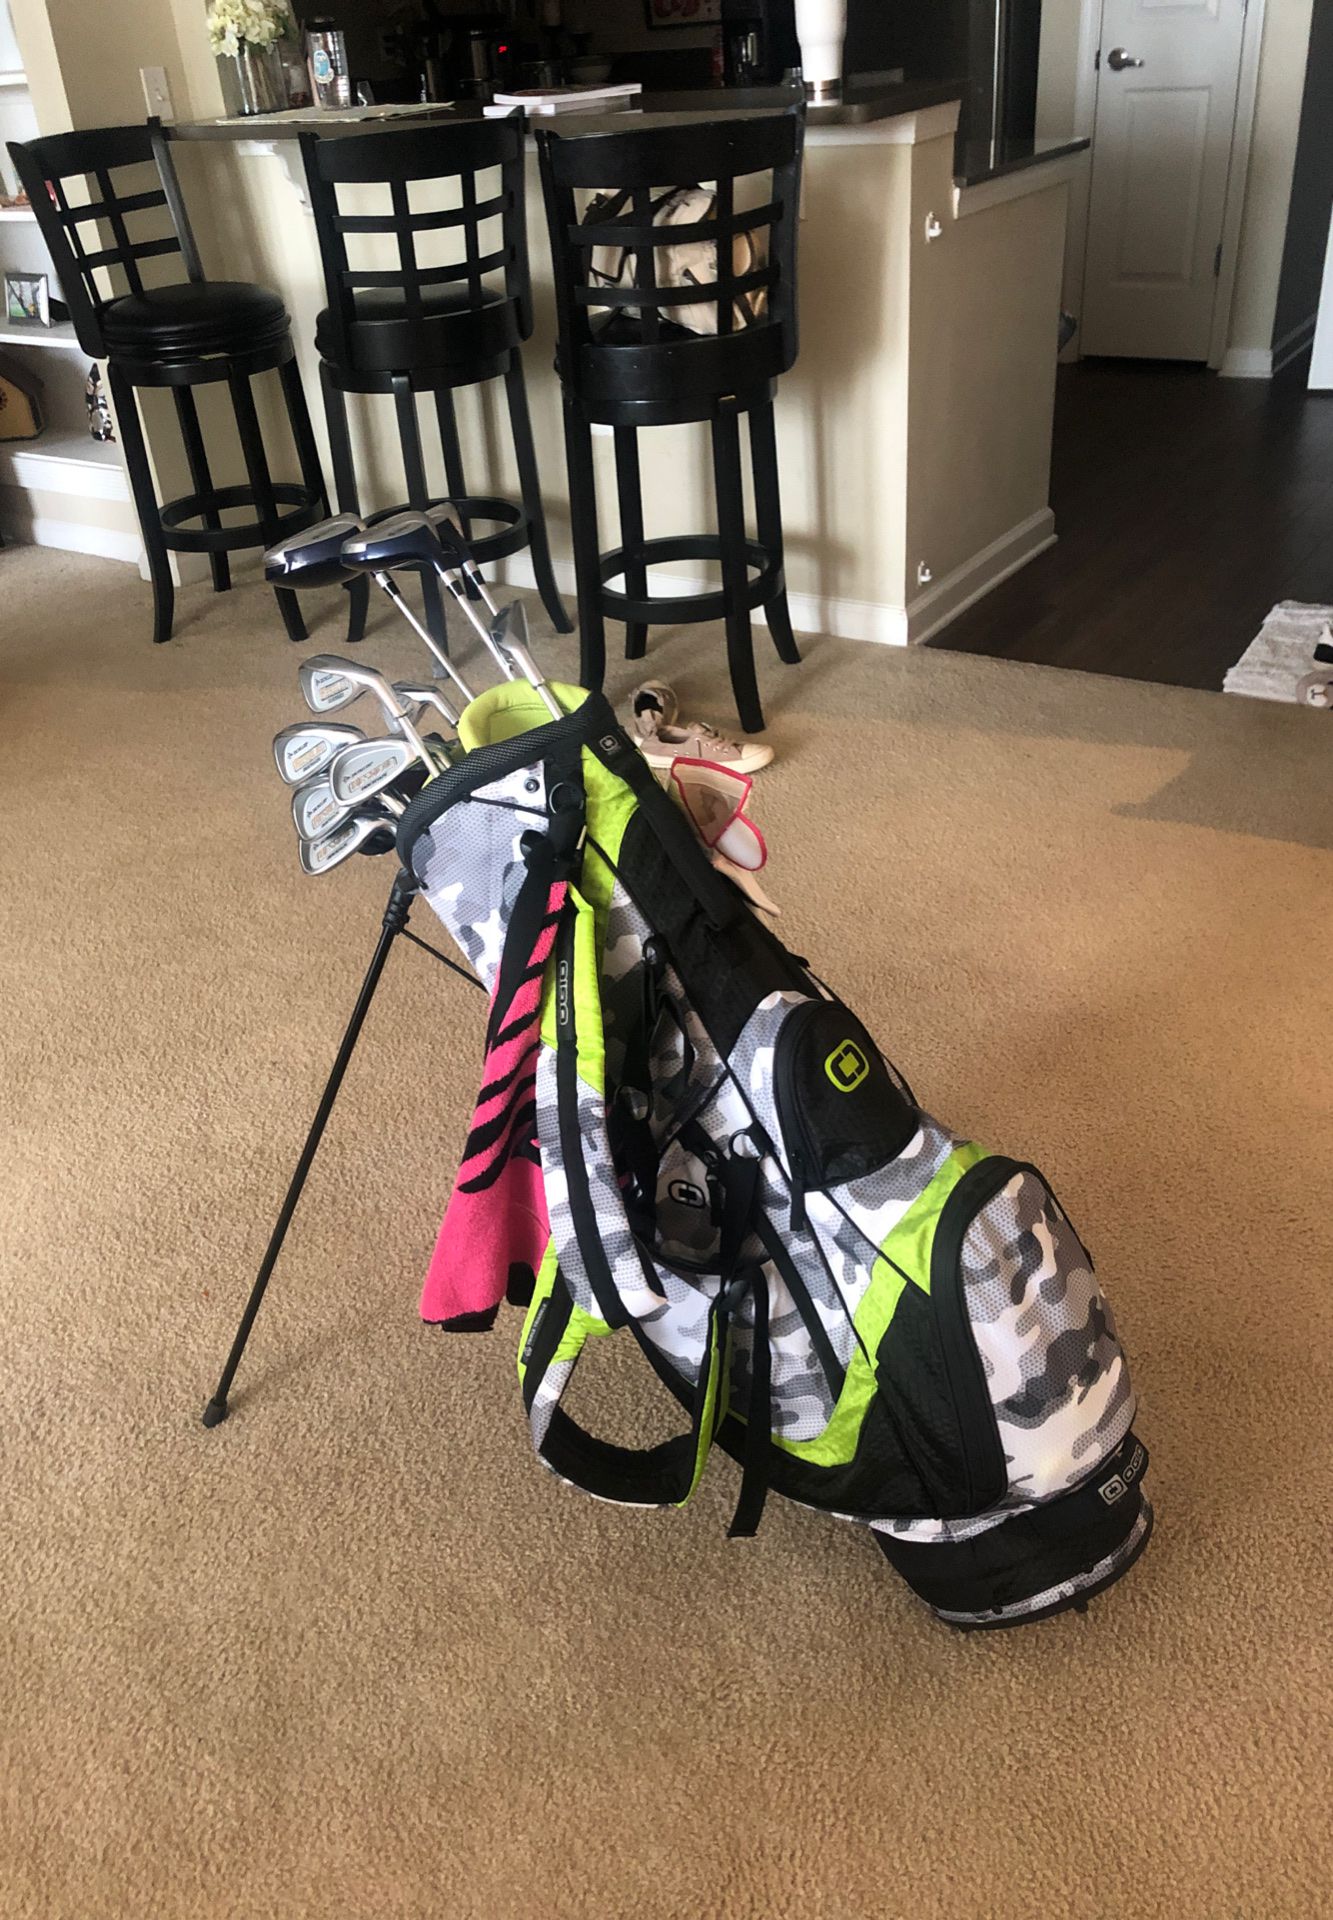 Golf clubs with Ogio bag, towel, ladies glove, golf balls